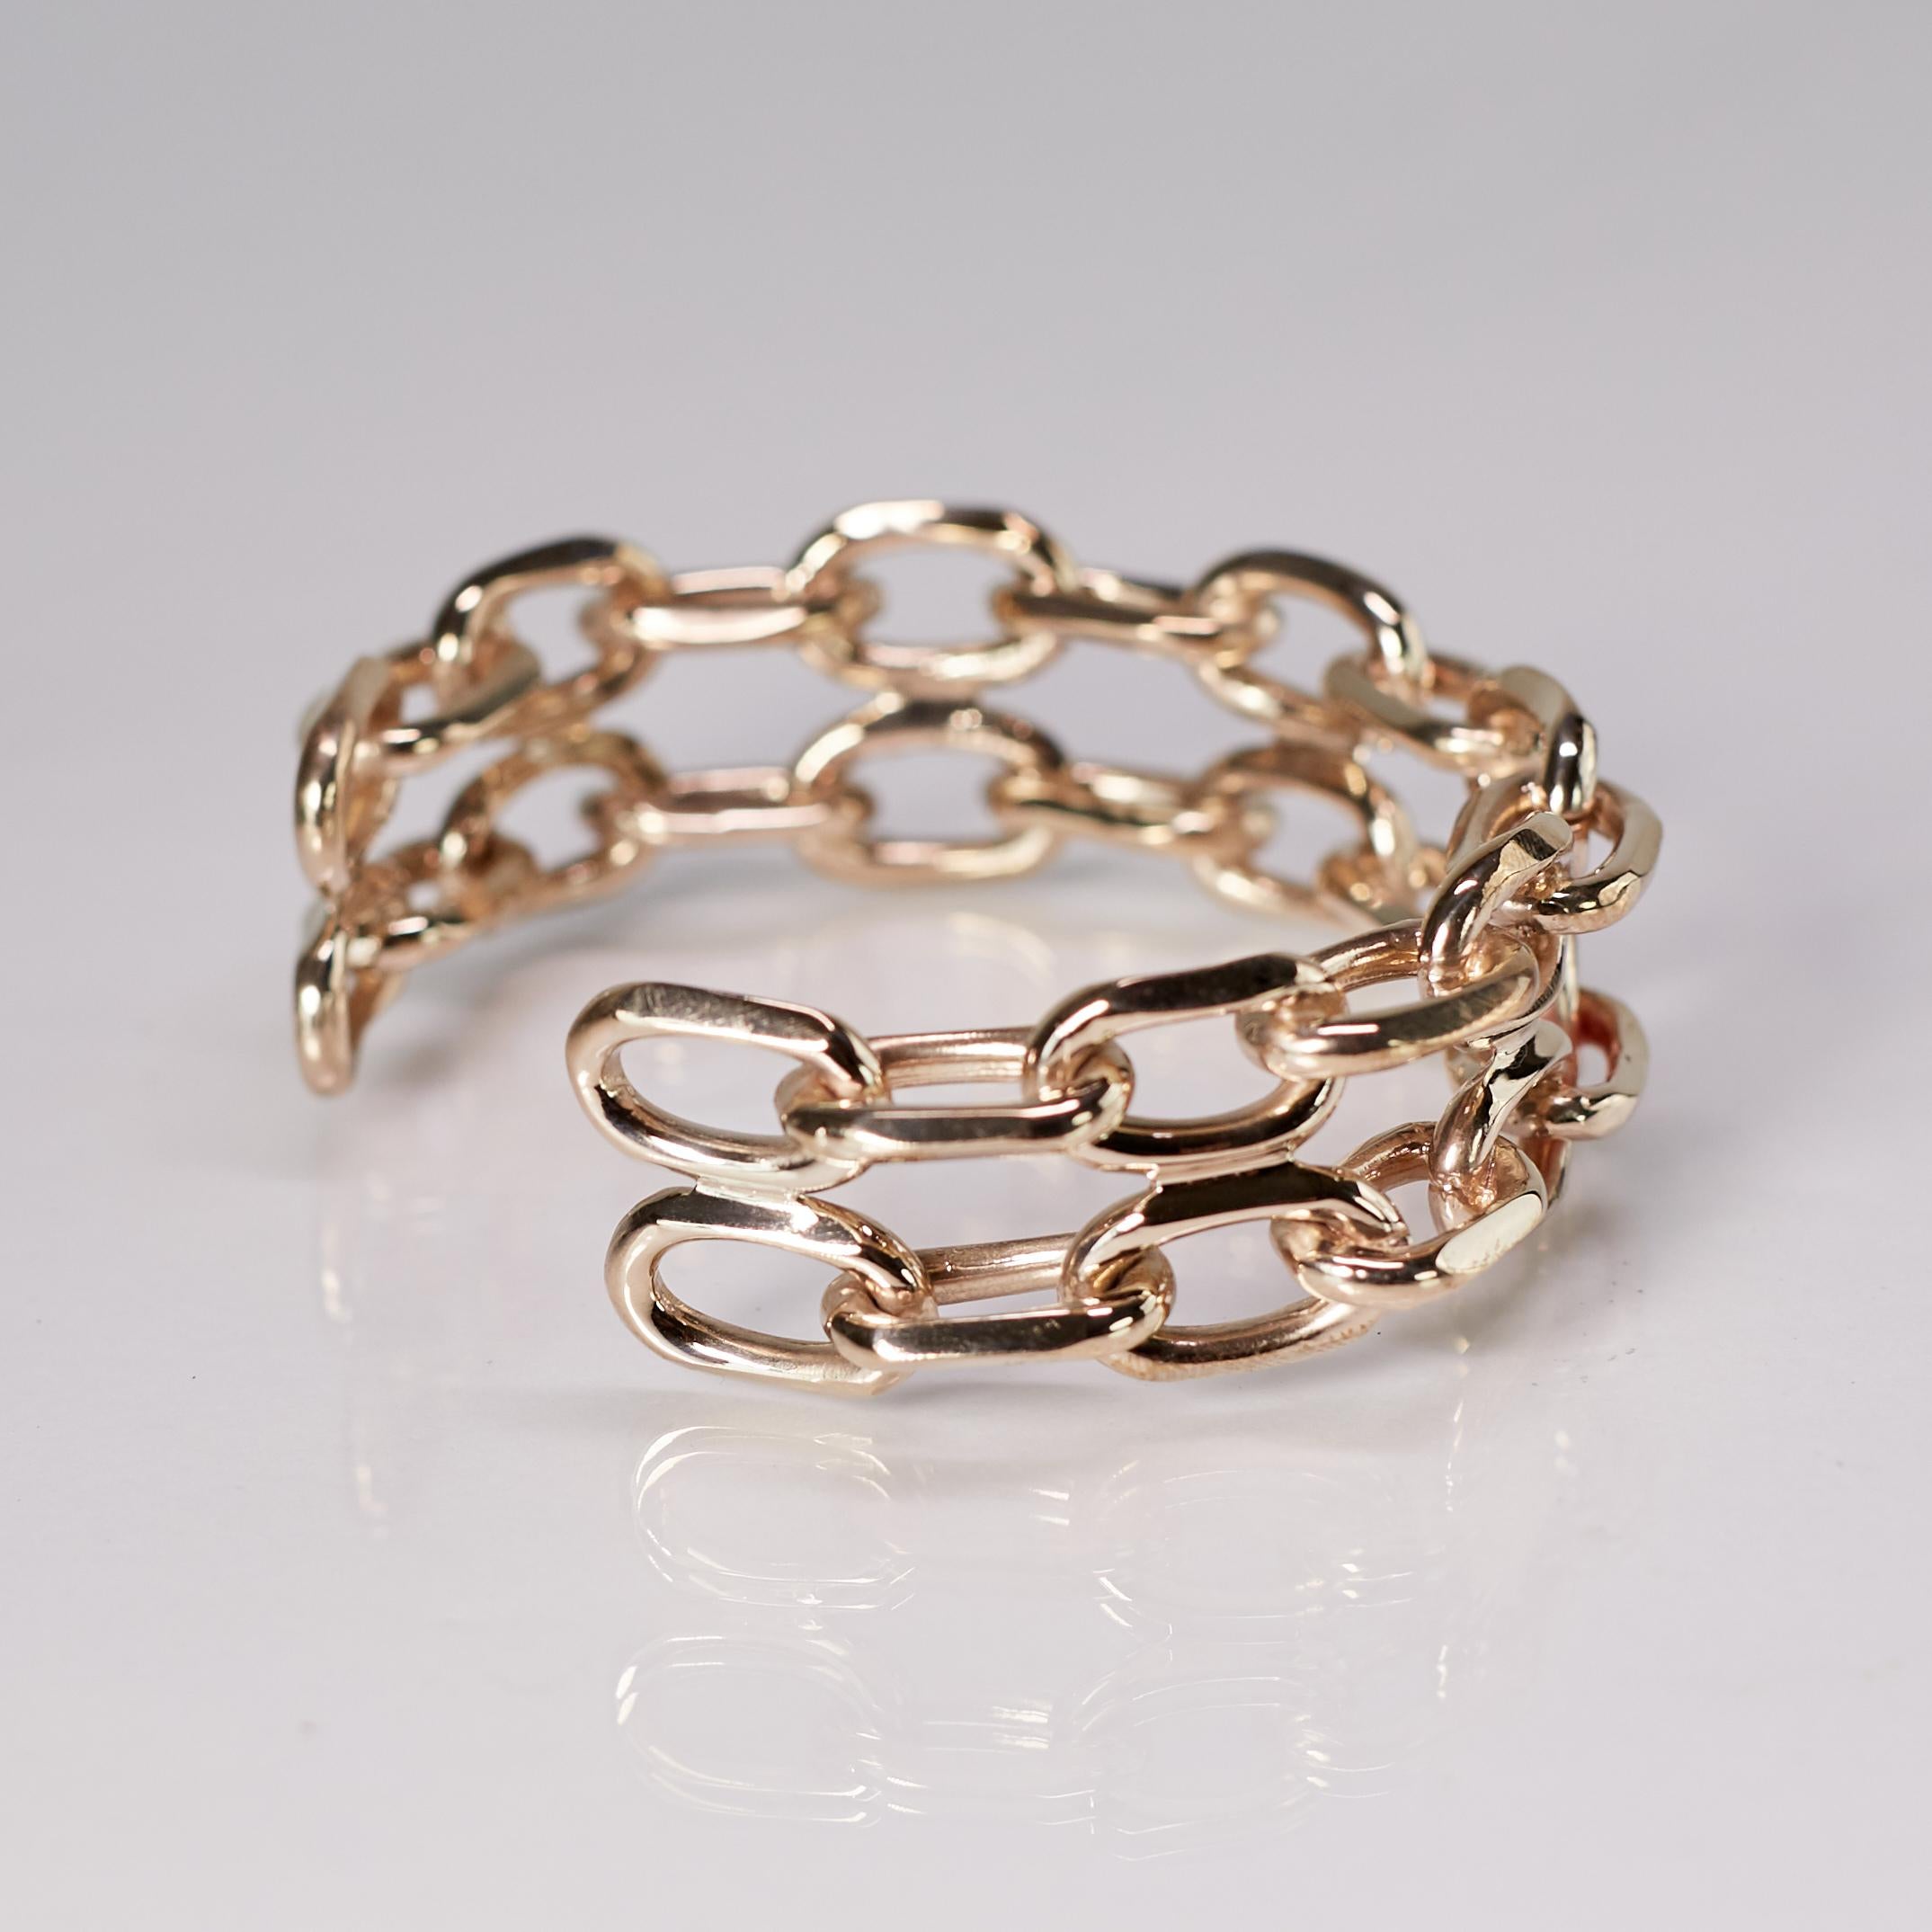 Chain Cuff Bangle Bracelet Gold Plated Brass Statement Piece J Dauphin

J DAUPHIN 